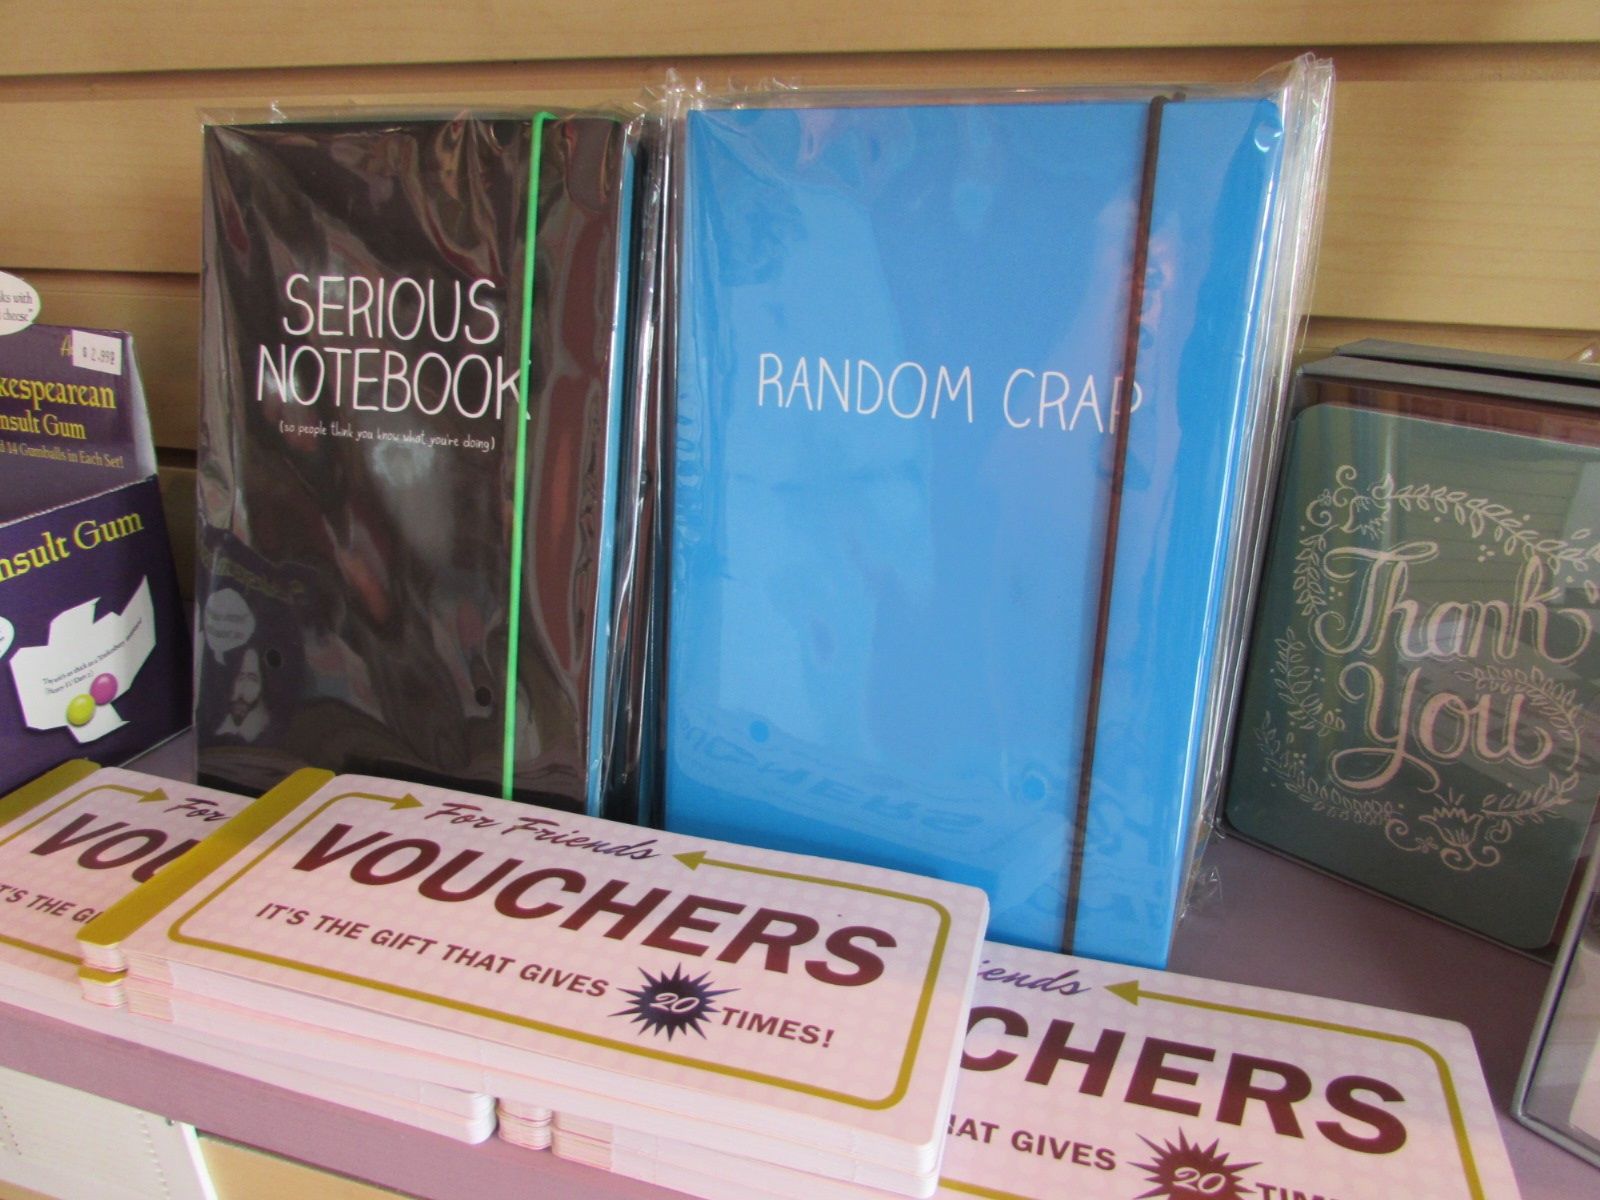 Notebooks, $12.99